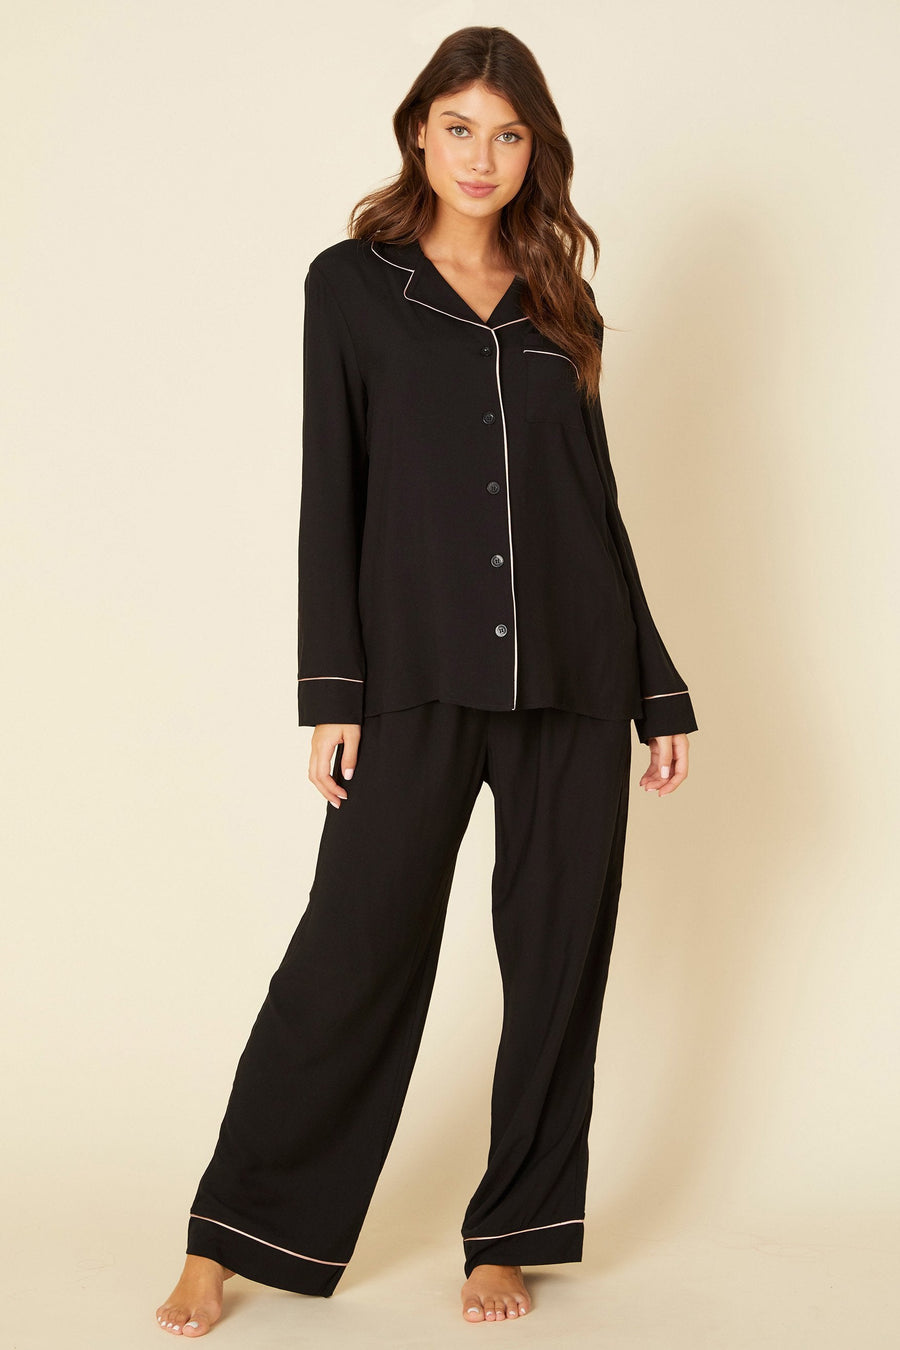 Black Set - Bella Luxe Long Sleeve Top & Pant Pajama Set